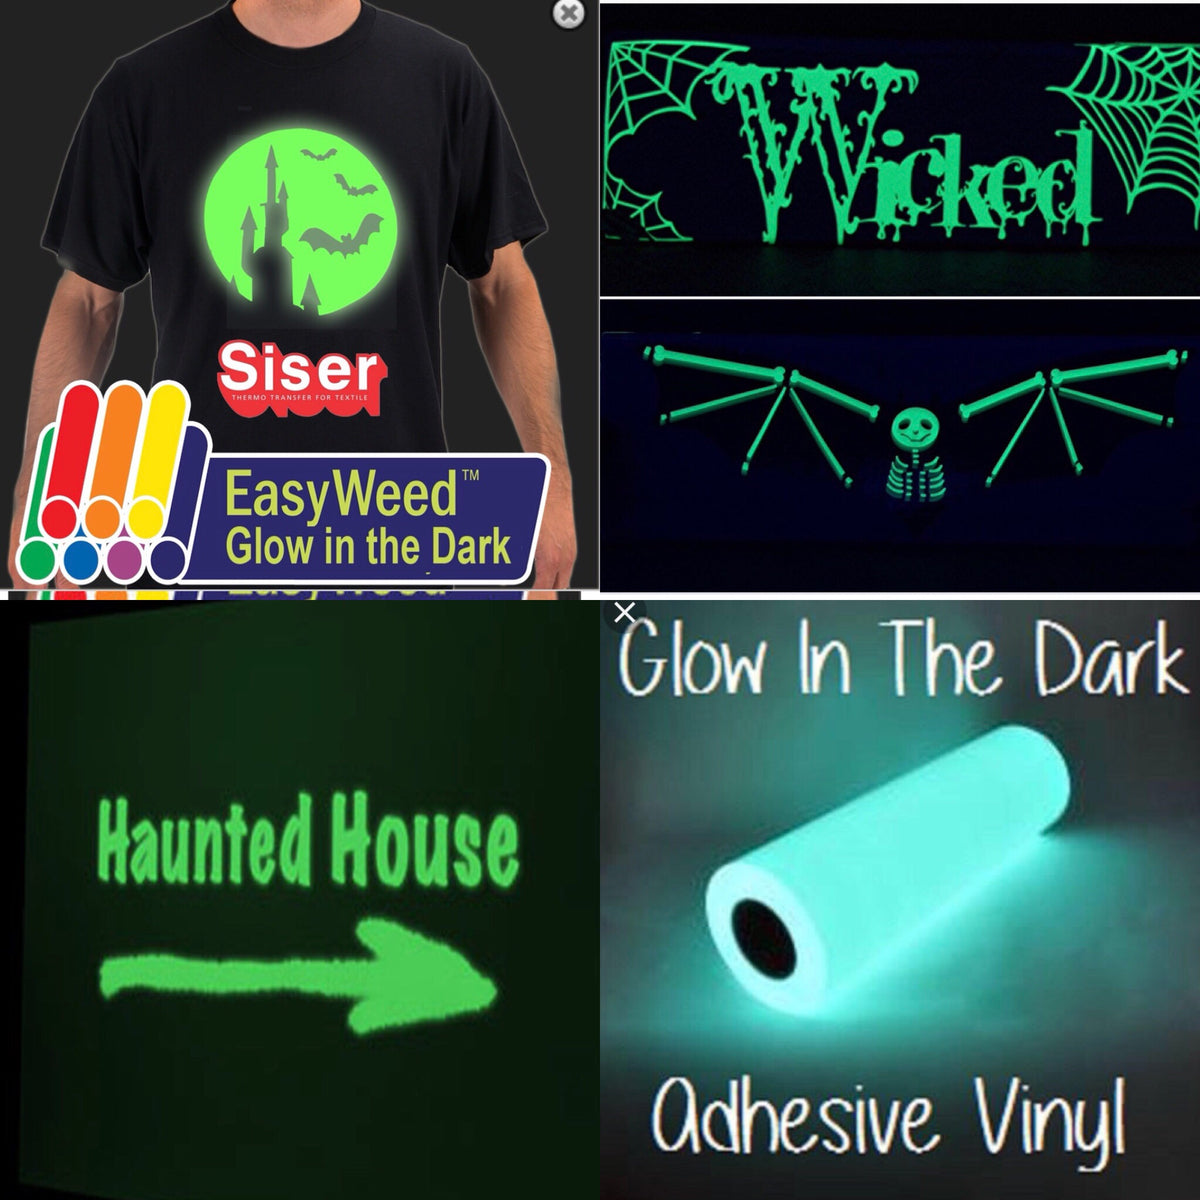 Glow In The Dark Htv Yellow Glow in the Dark Heat Transfer Vinyl Sheet –  shopcraftables